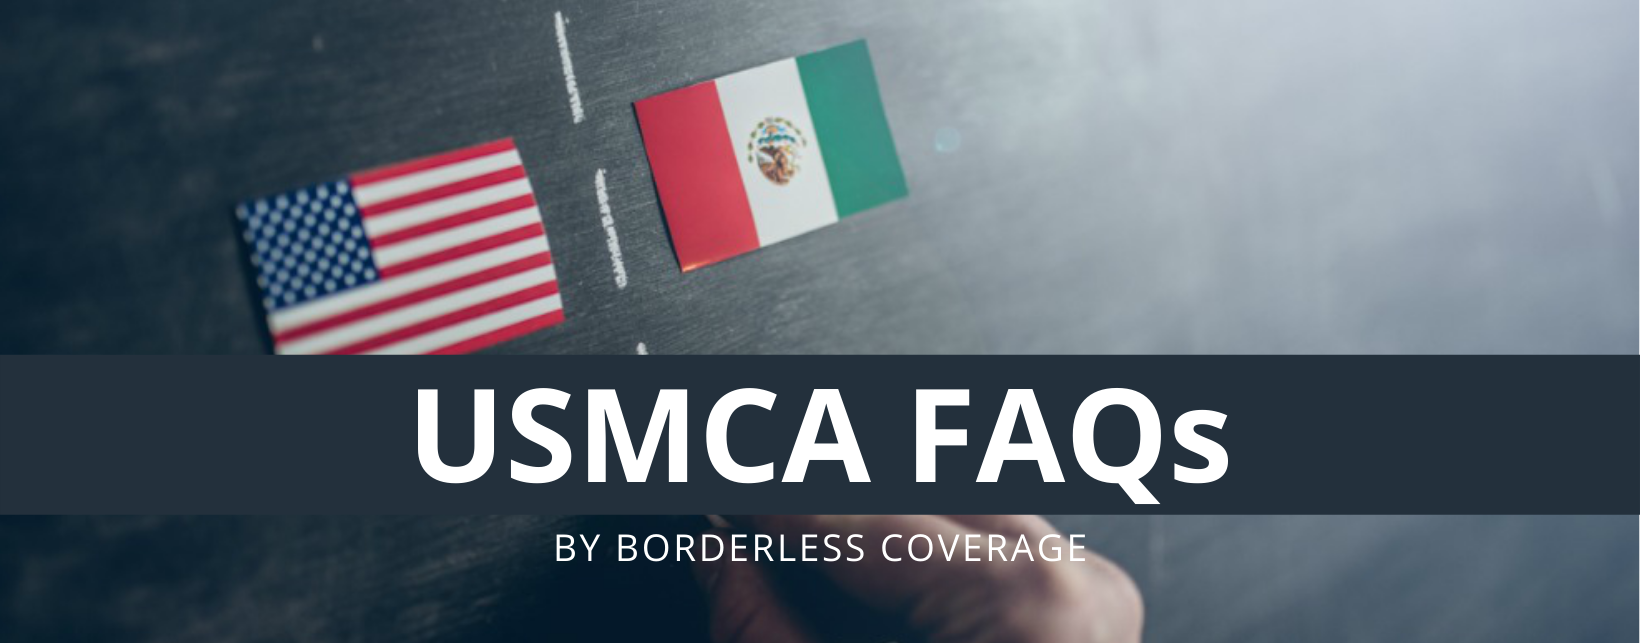 USMCA FAQs Image